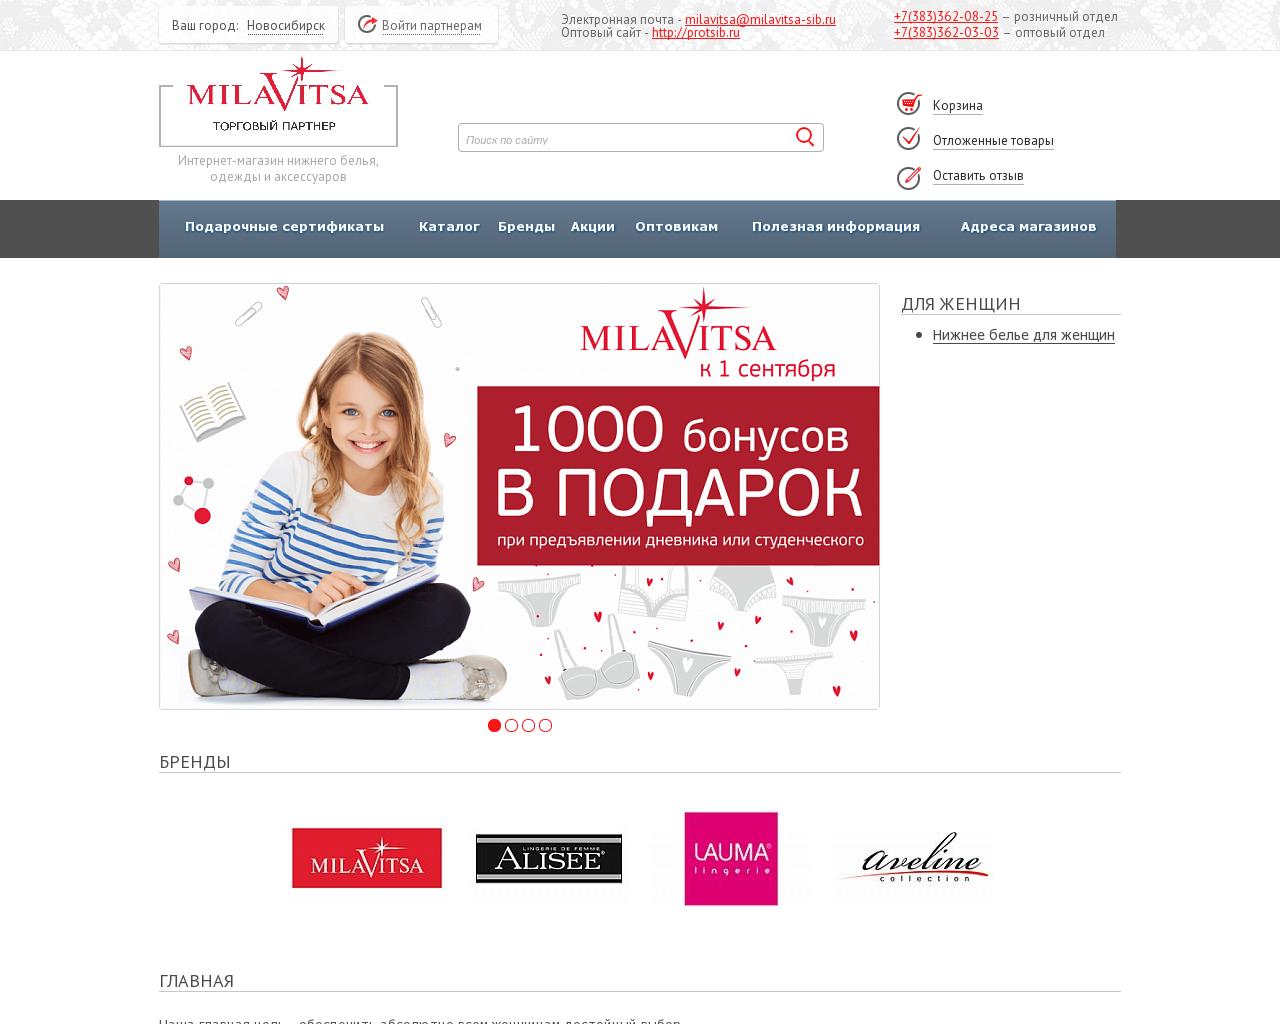 Изображение сайта milavitsa-sib.ru в разрешении 1280x1024